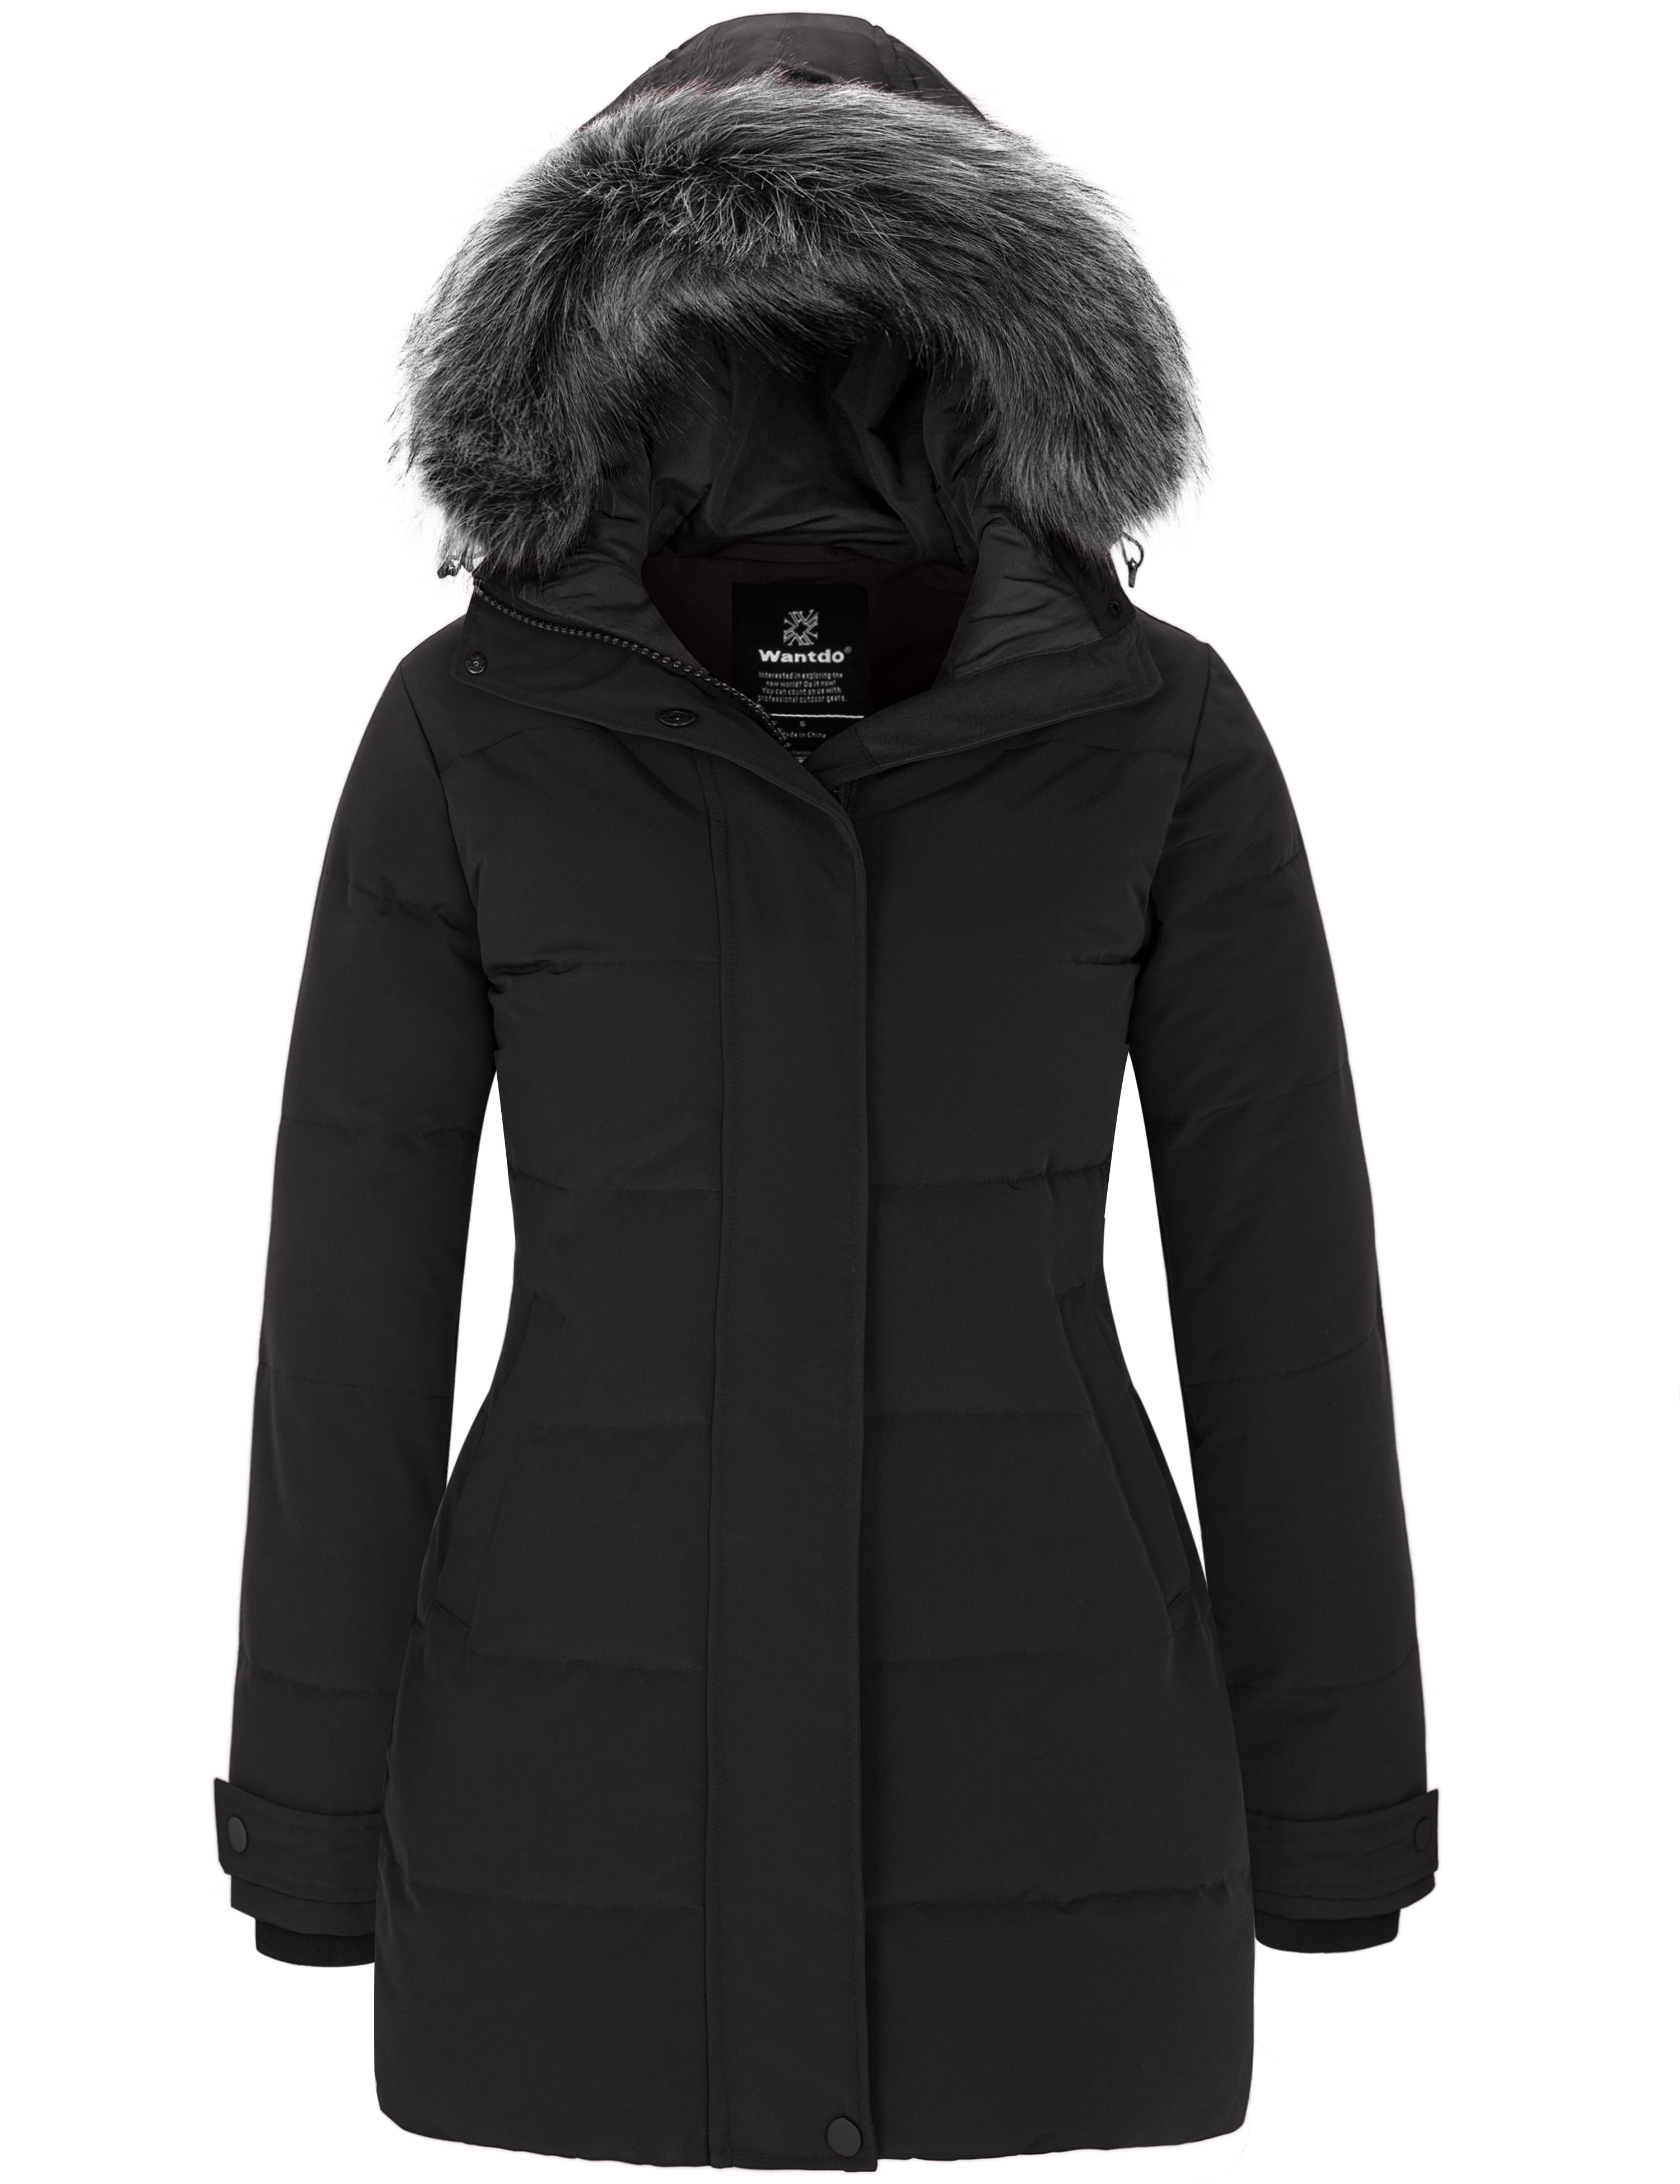 Wantdo Women's Plus Size Winter Coats Quilted Winter Jacket Puffer ...